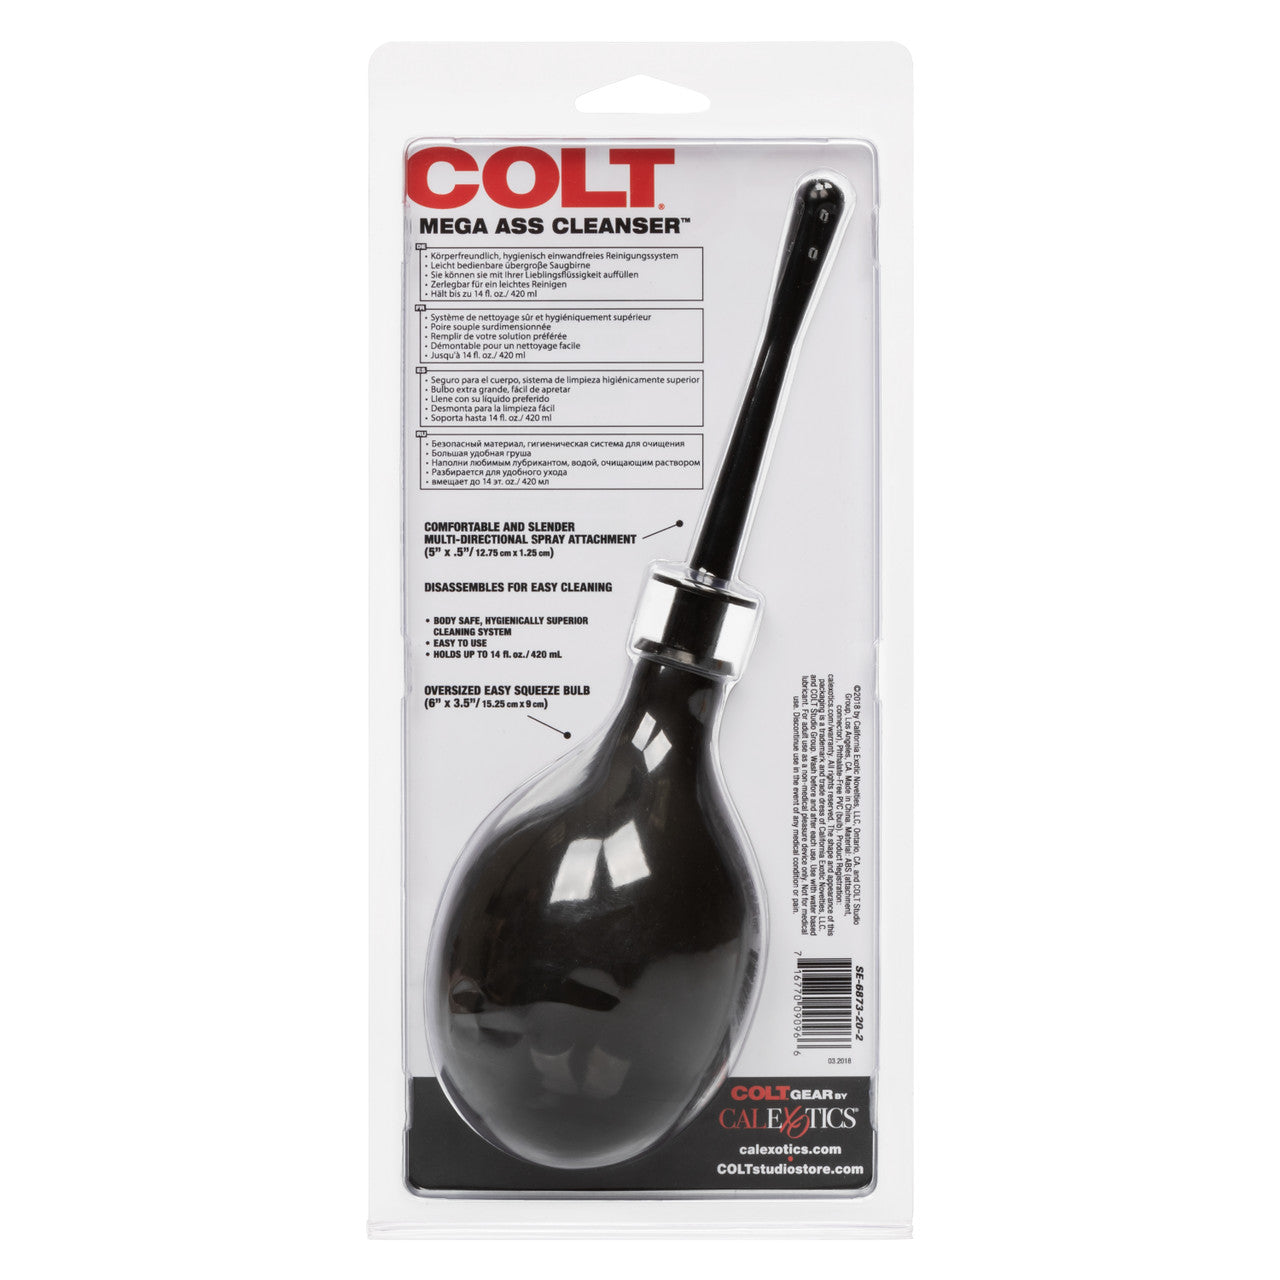 Colt Mega Ass Cleanser - 14oz/420ml - Thorn & Feather